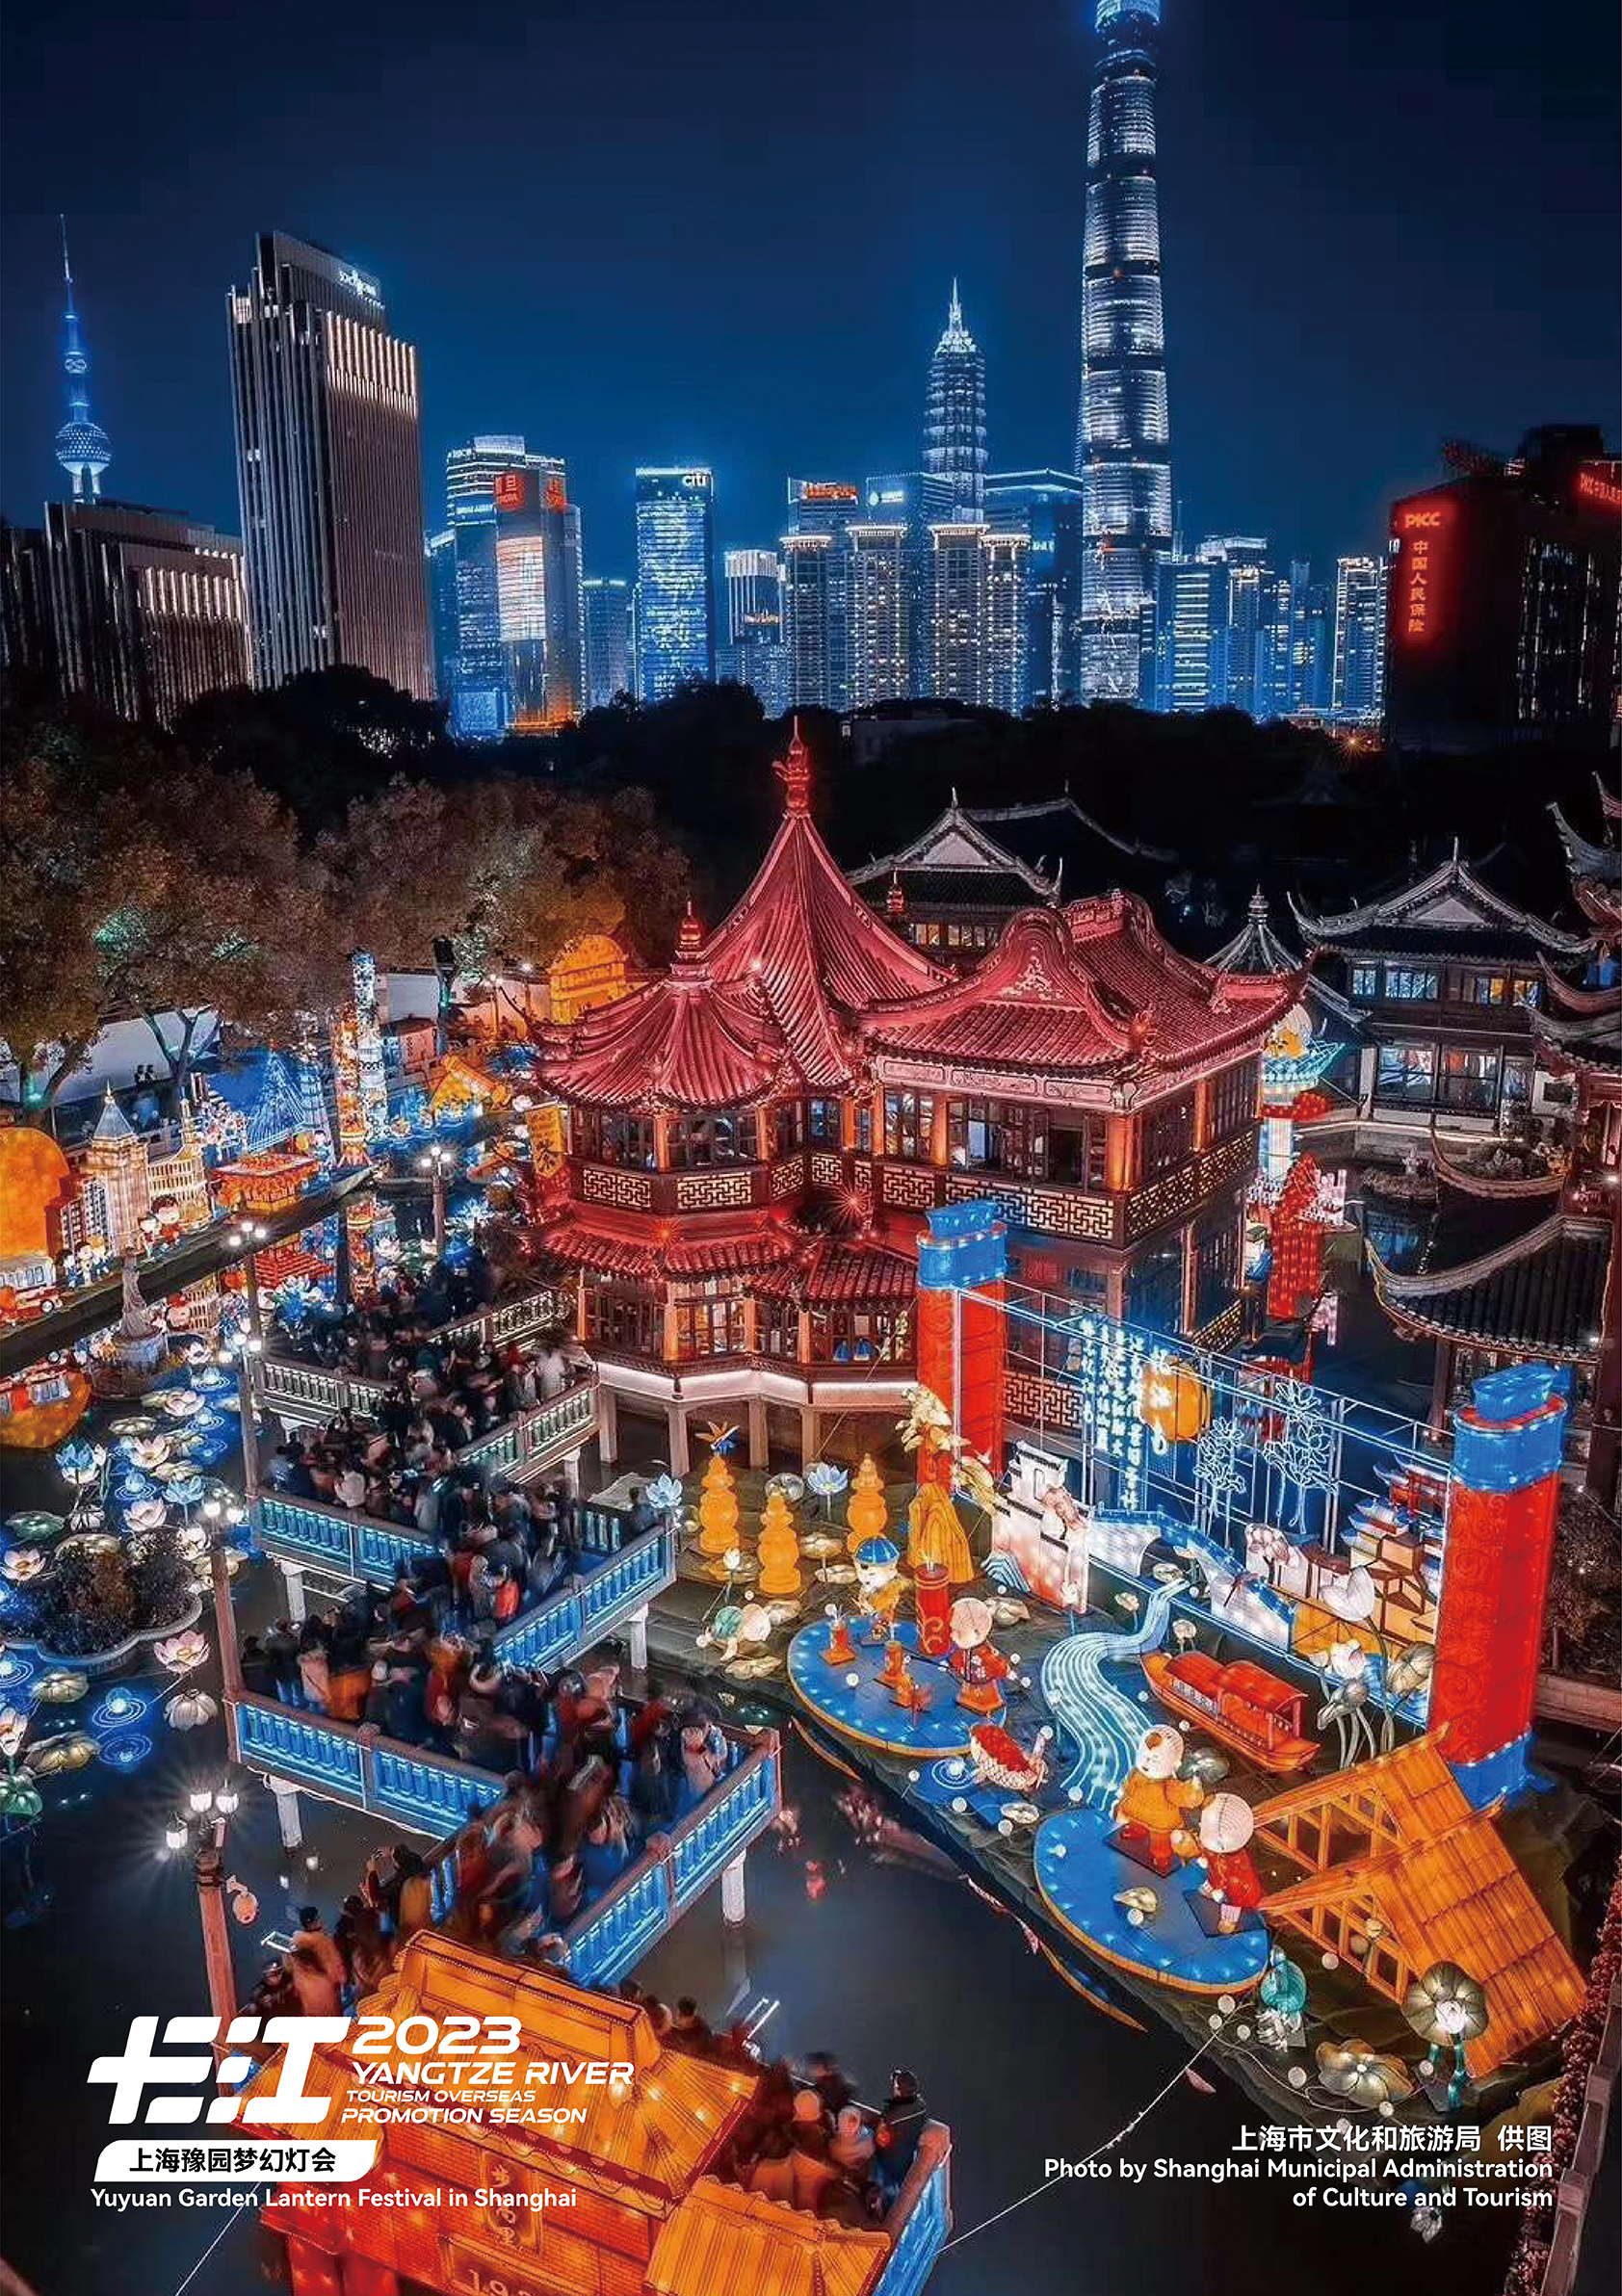 Yuyuan Garden Lantern Festival in Shanghai, China /Photo provided to CGTN